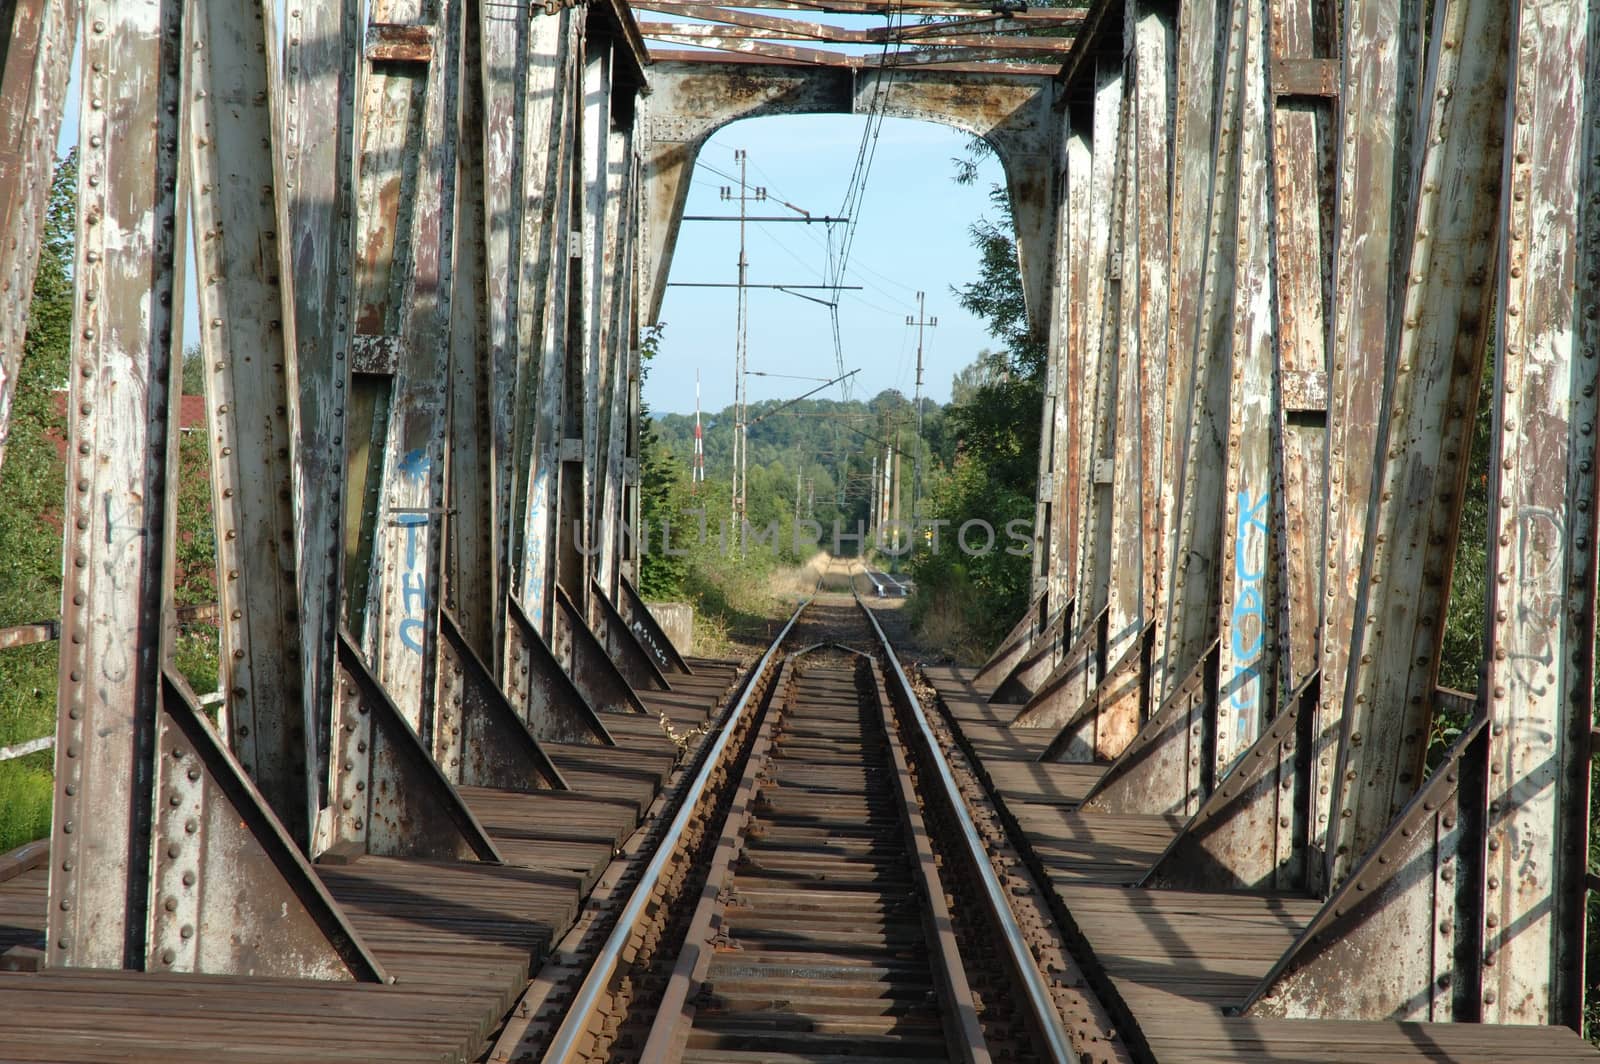 Old railway viaduct by janhetman